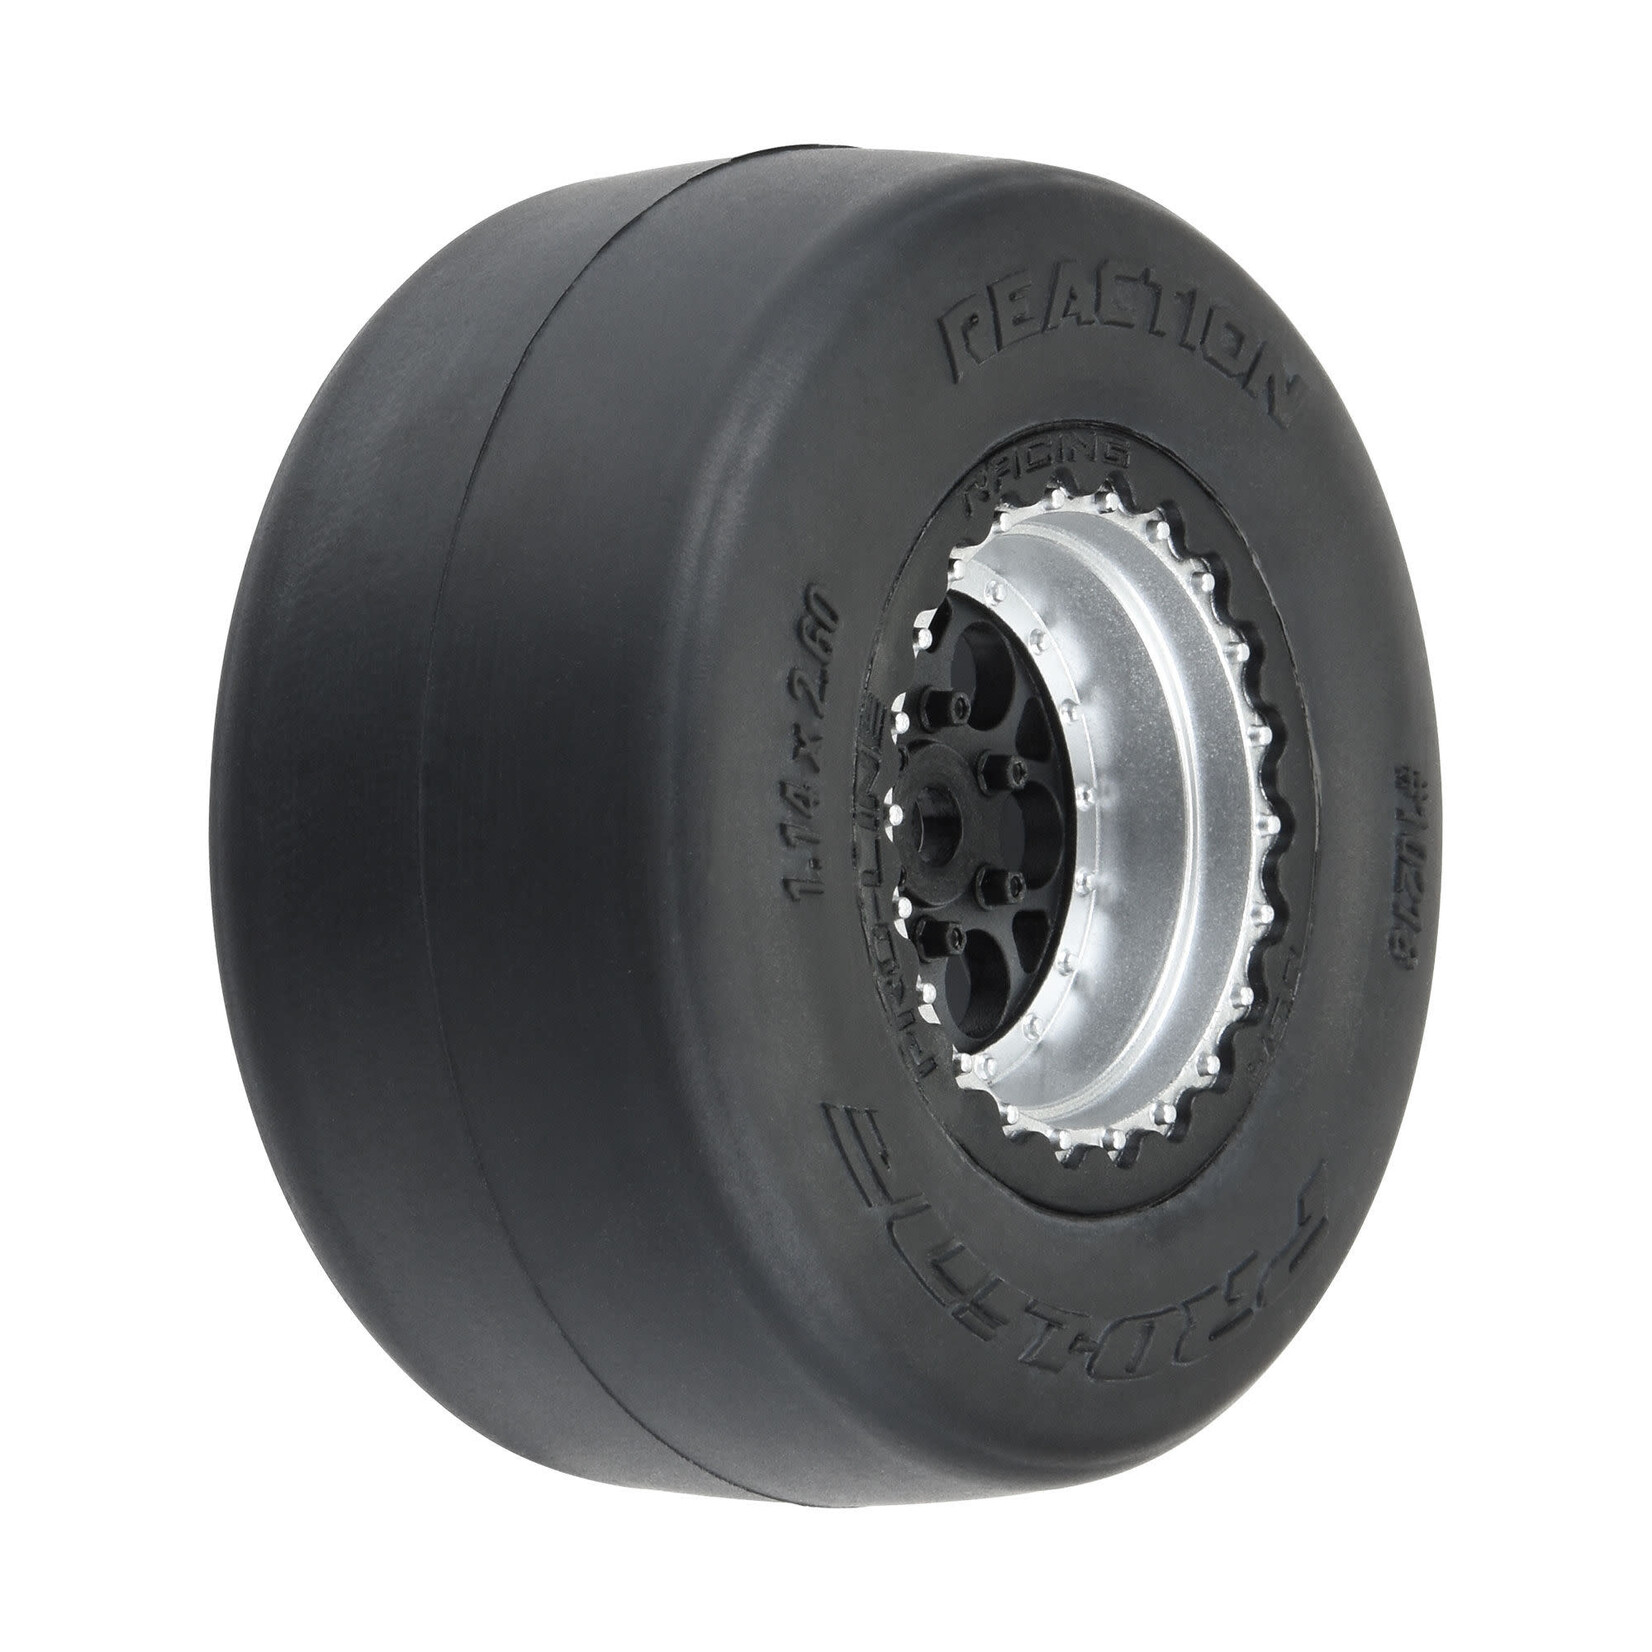 Pro-Line Pro-Line 1/16 Reaction Rear Tires MTD 8mm Black/Silver (2) (Losi Mini Drag) #10218-10